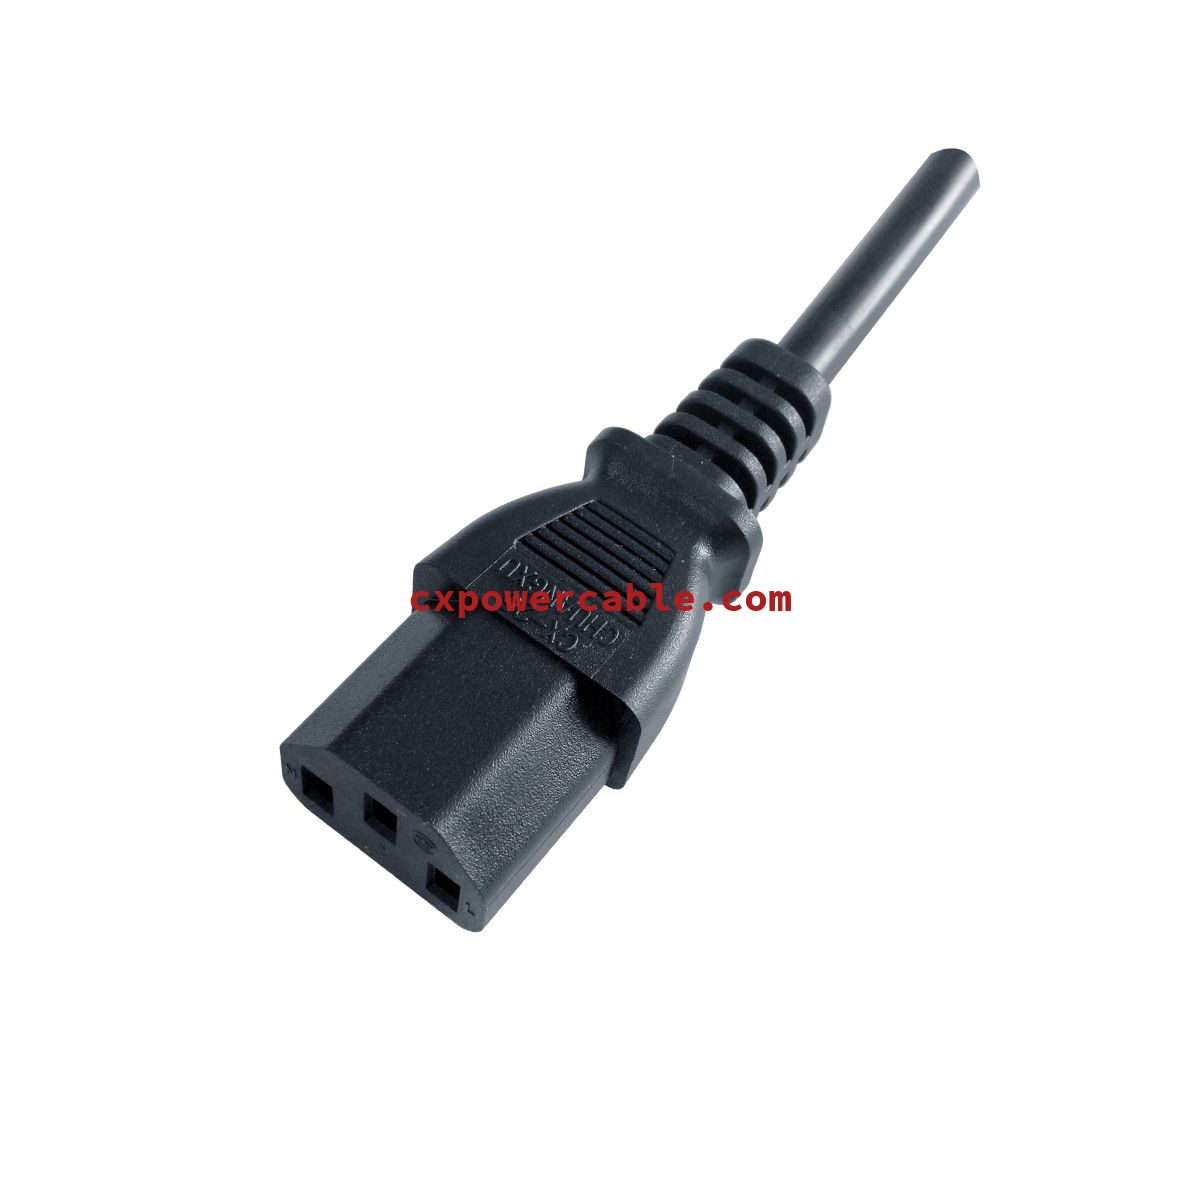 Japan 2pin power plug with ground wire+ 3pin tail plug power cable